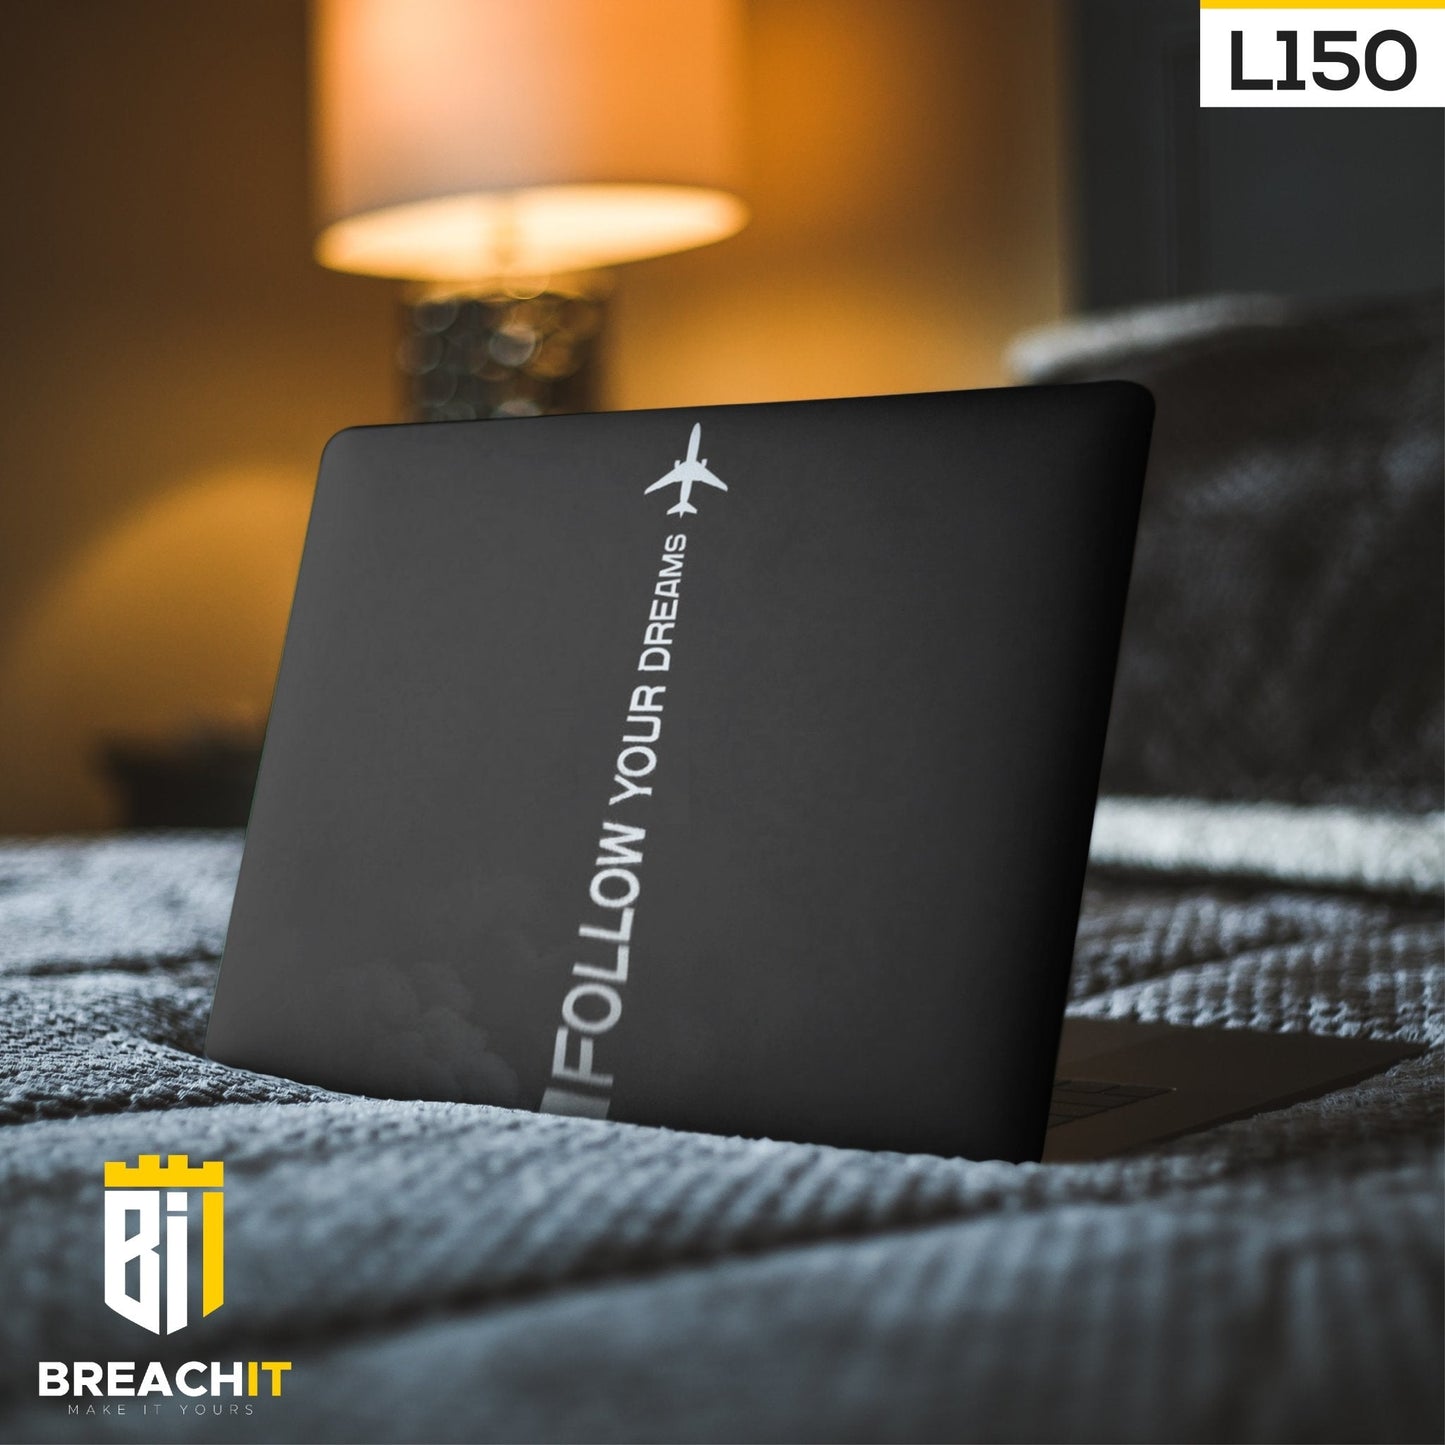 L150 Black Aesthetic Laptop Skin - BREACHIT